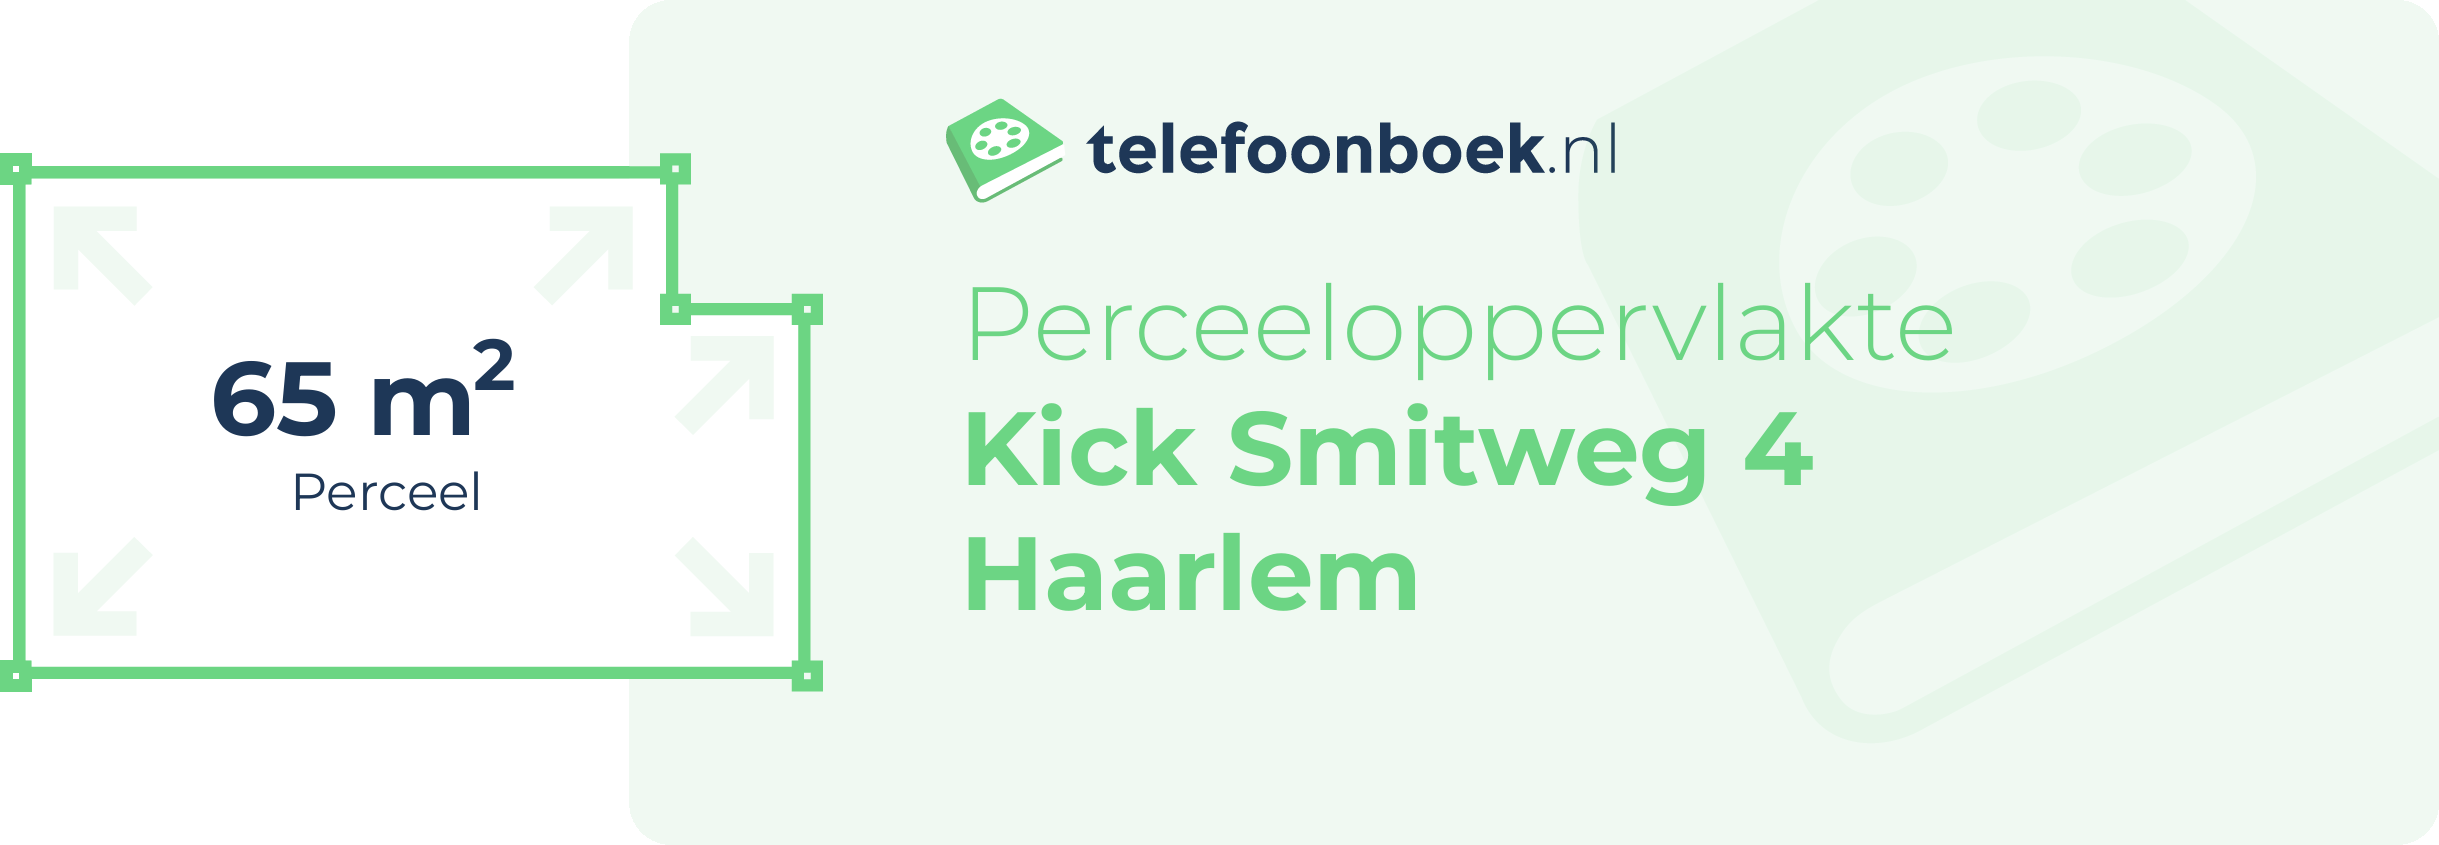 Perceeloppervlakte Kick Smitweg 4 Haarlem